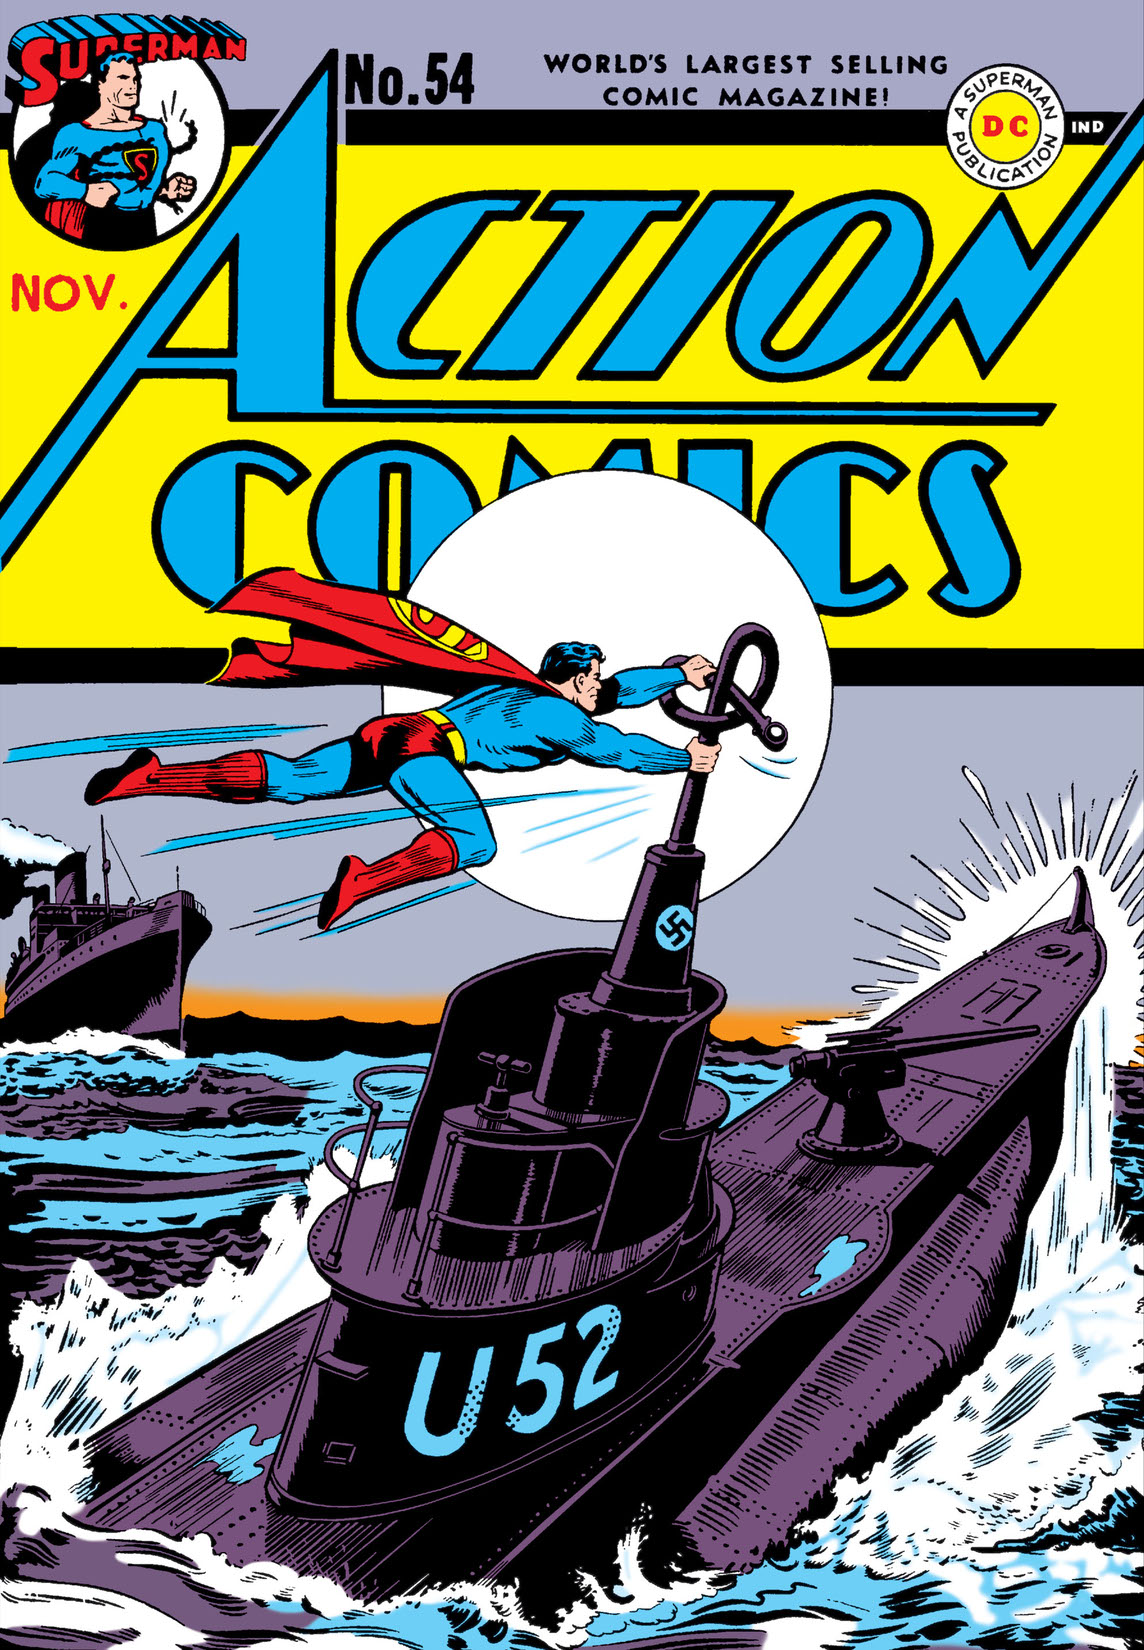 Action Comics (1938-) #54 preview images